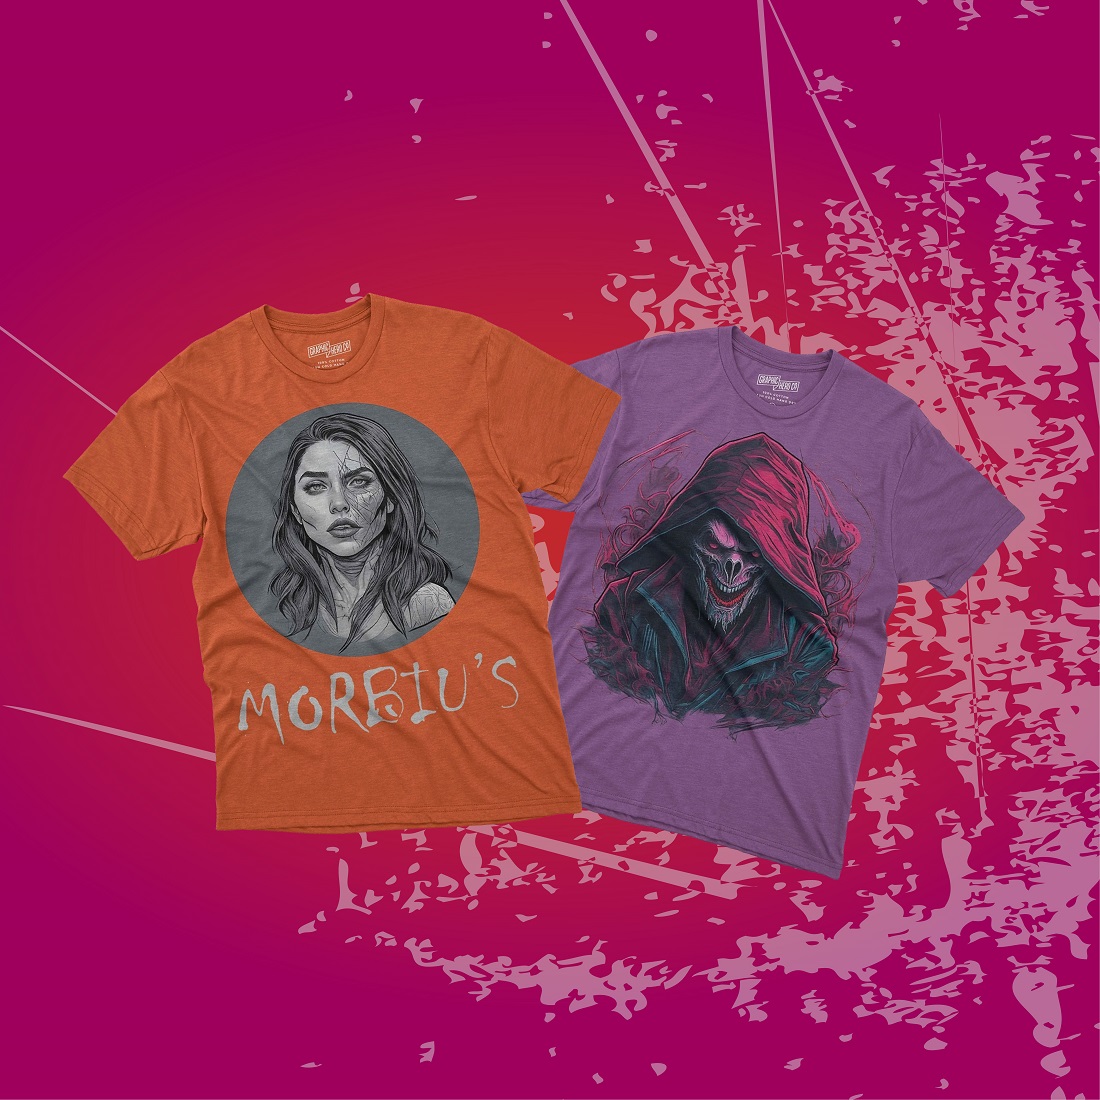 2 horror t-shirt designs morbius preview image.